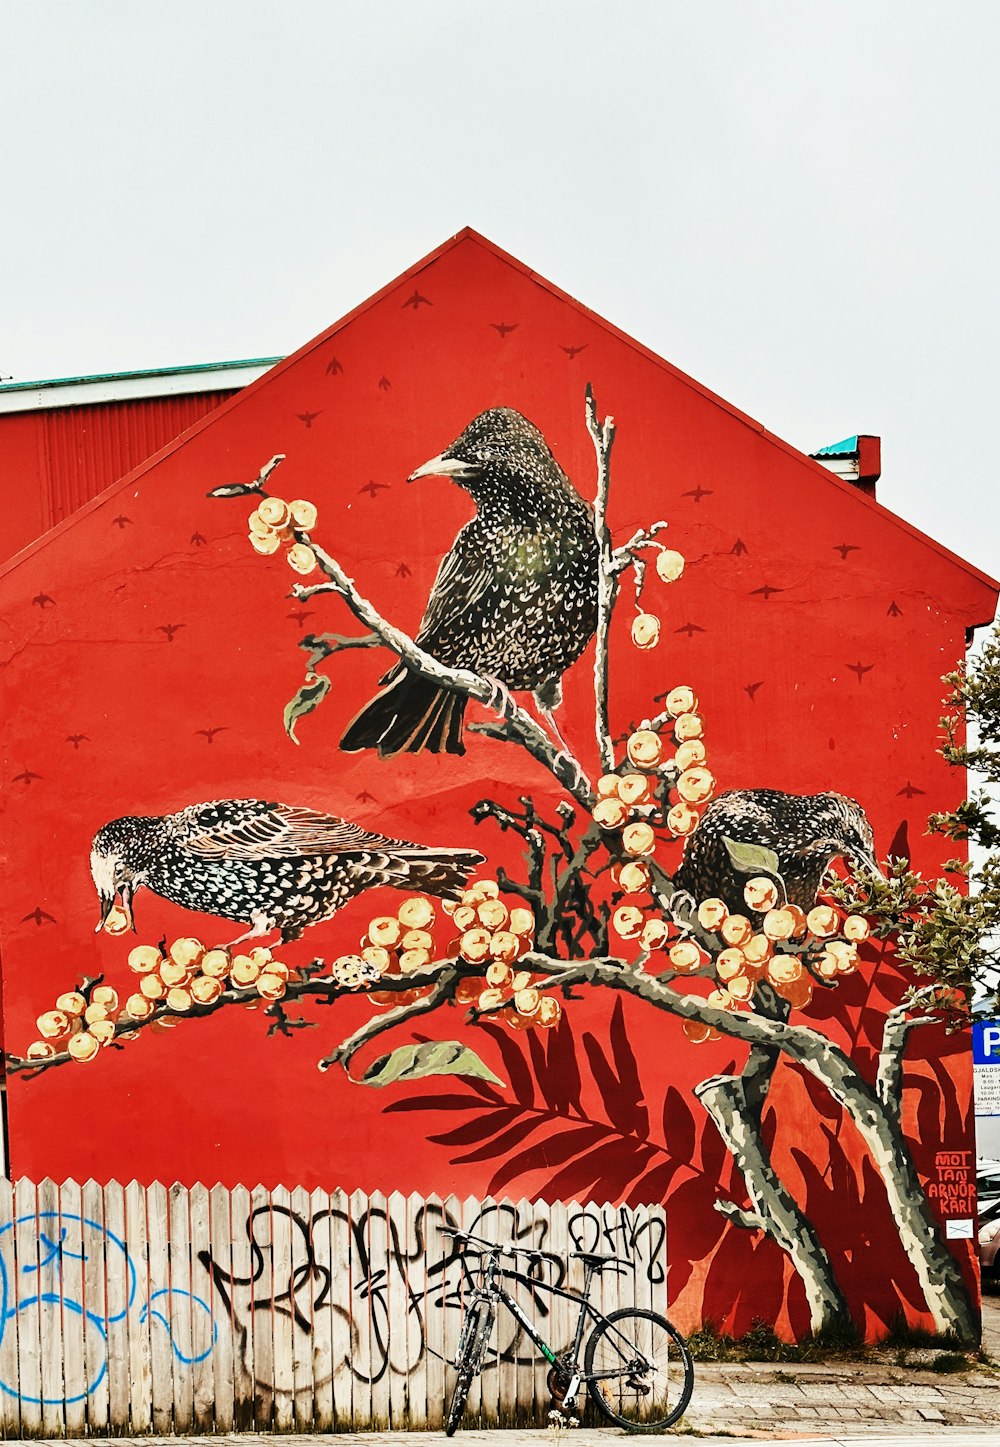 Un edificio rojo con un pájaro pintado